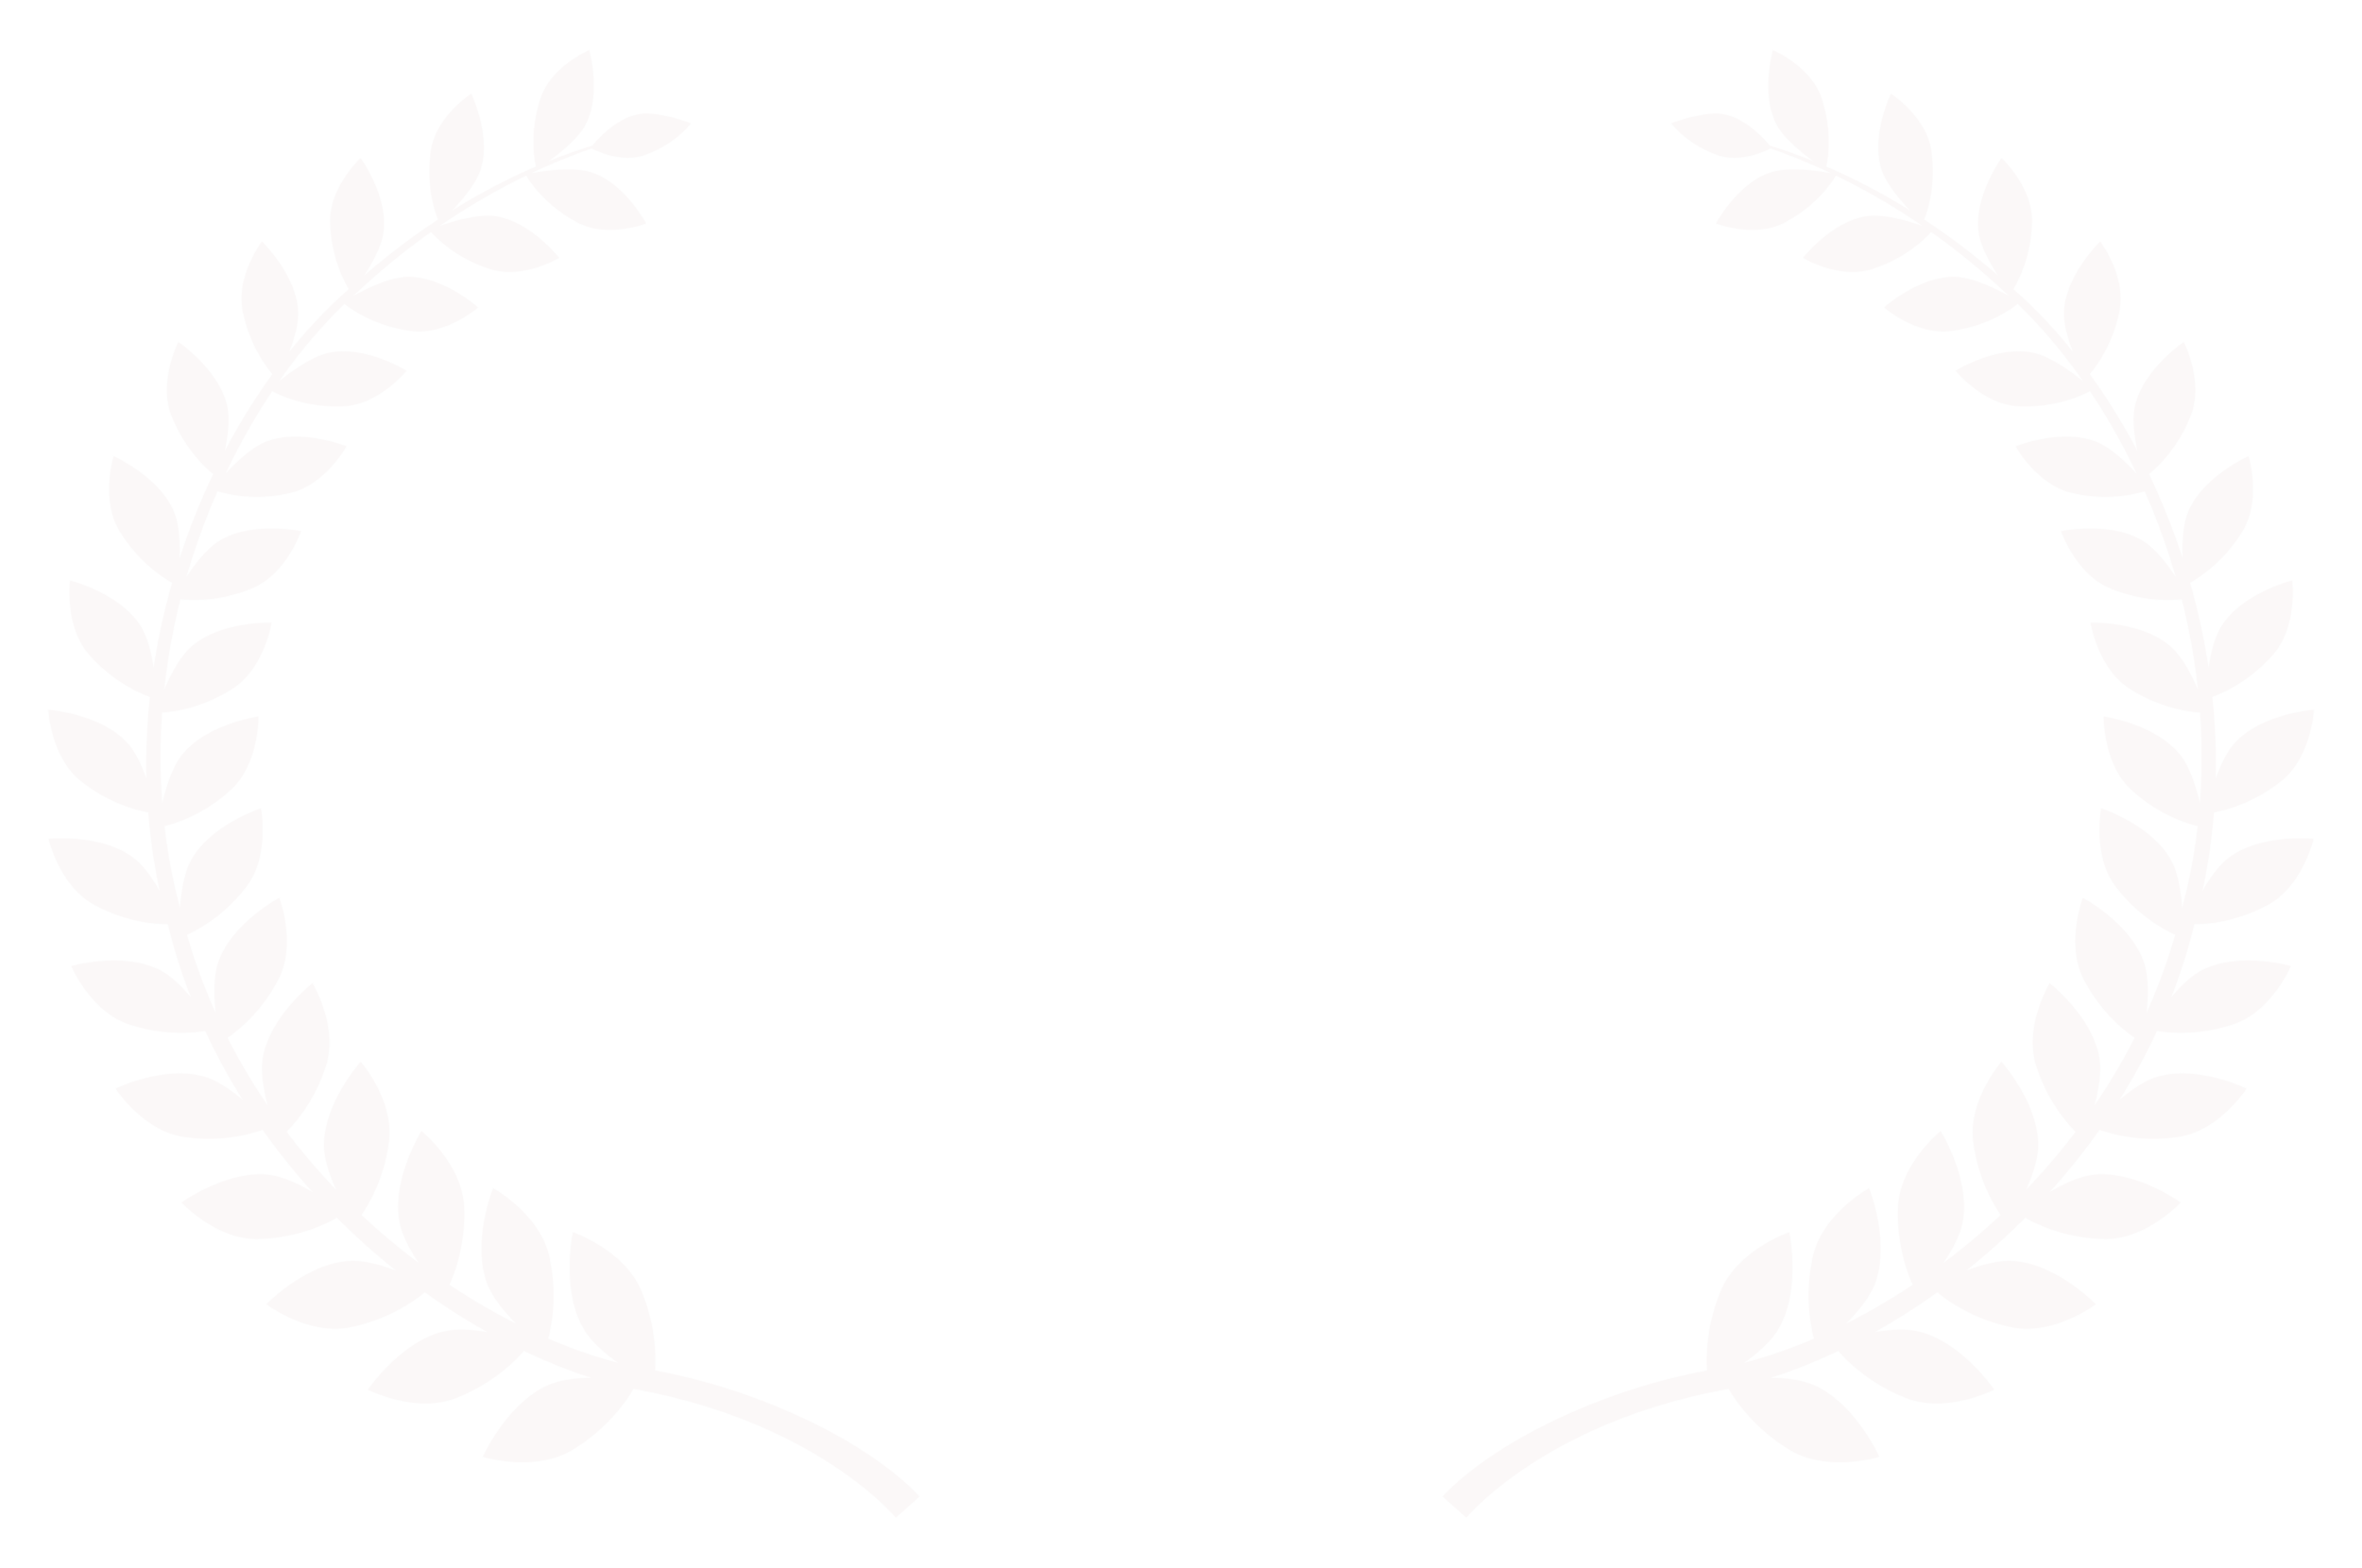 JuryAwardBestDocumentaryShort-PrescottFilmFestival-2021.png